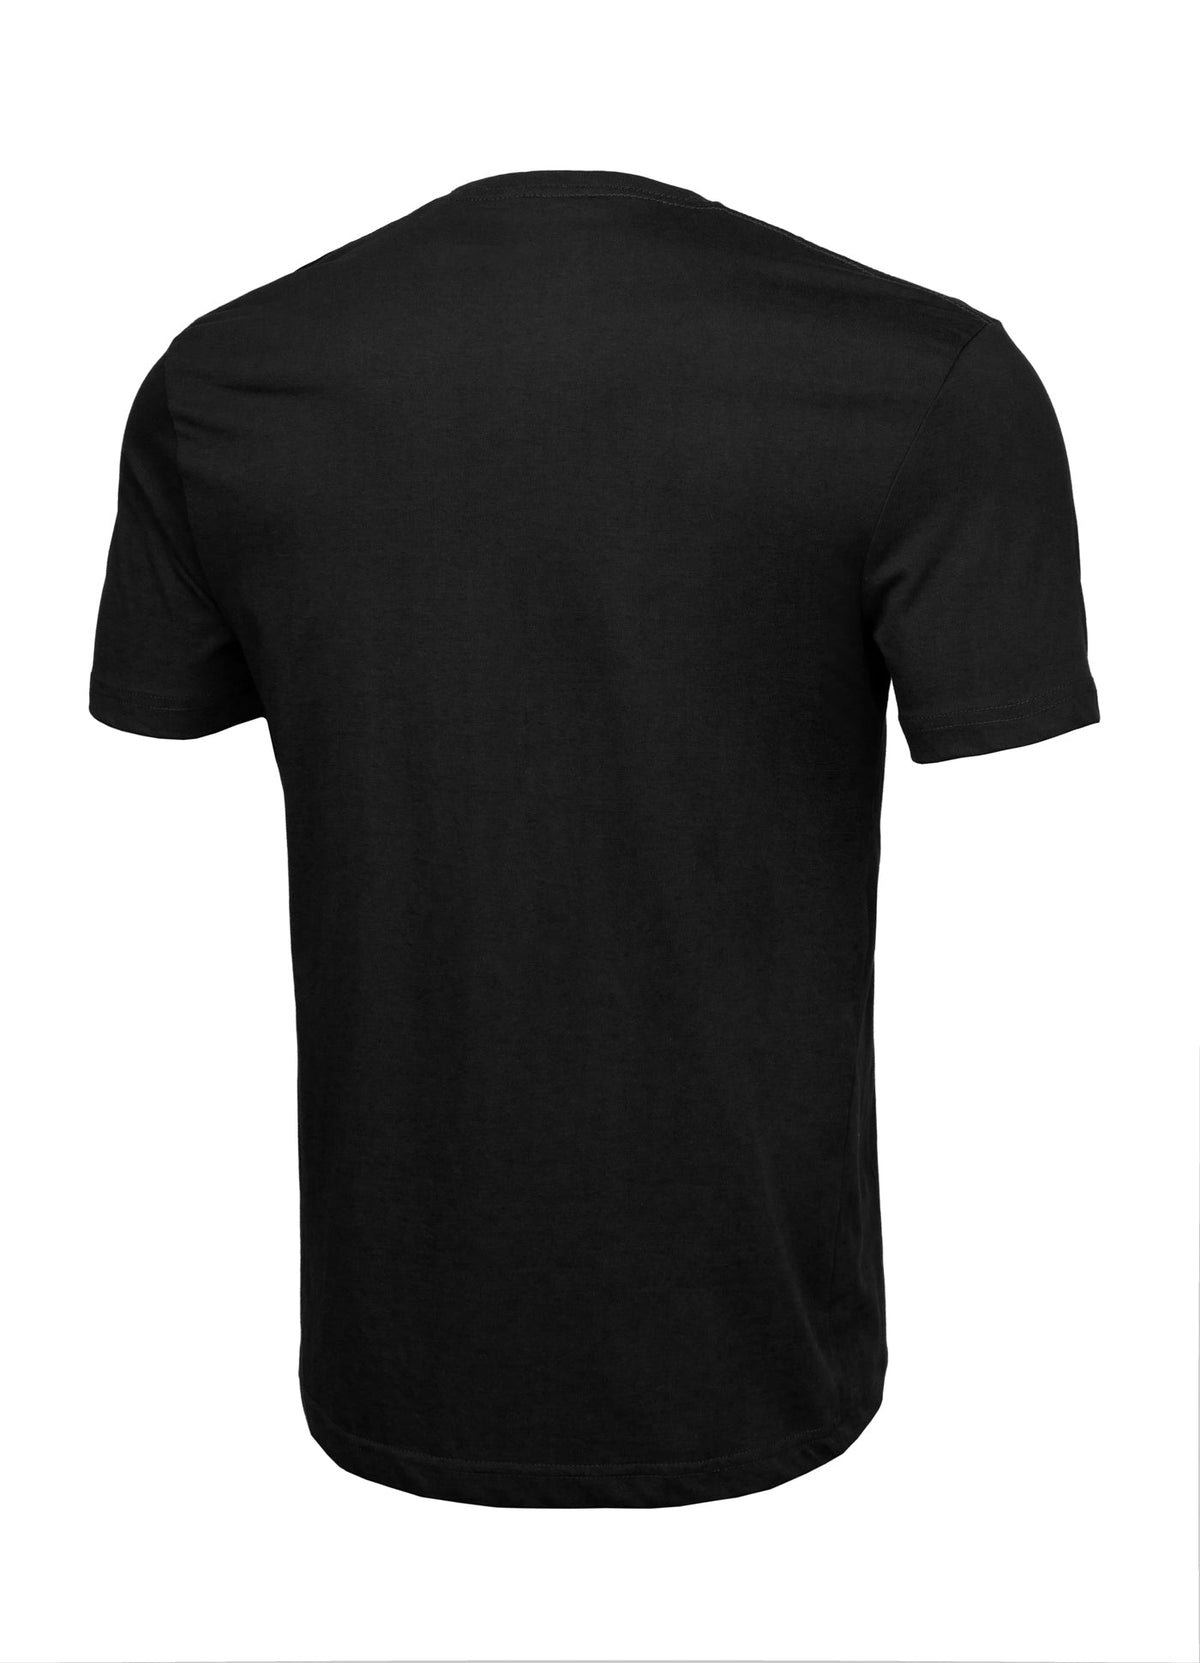 SMALL LOGO 21 Black T-Shirt